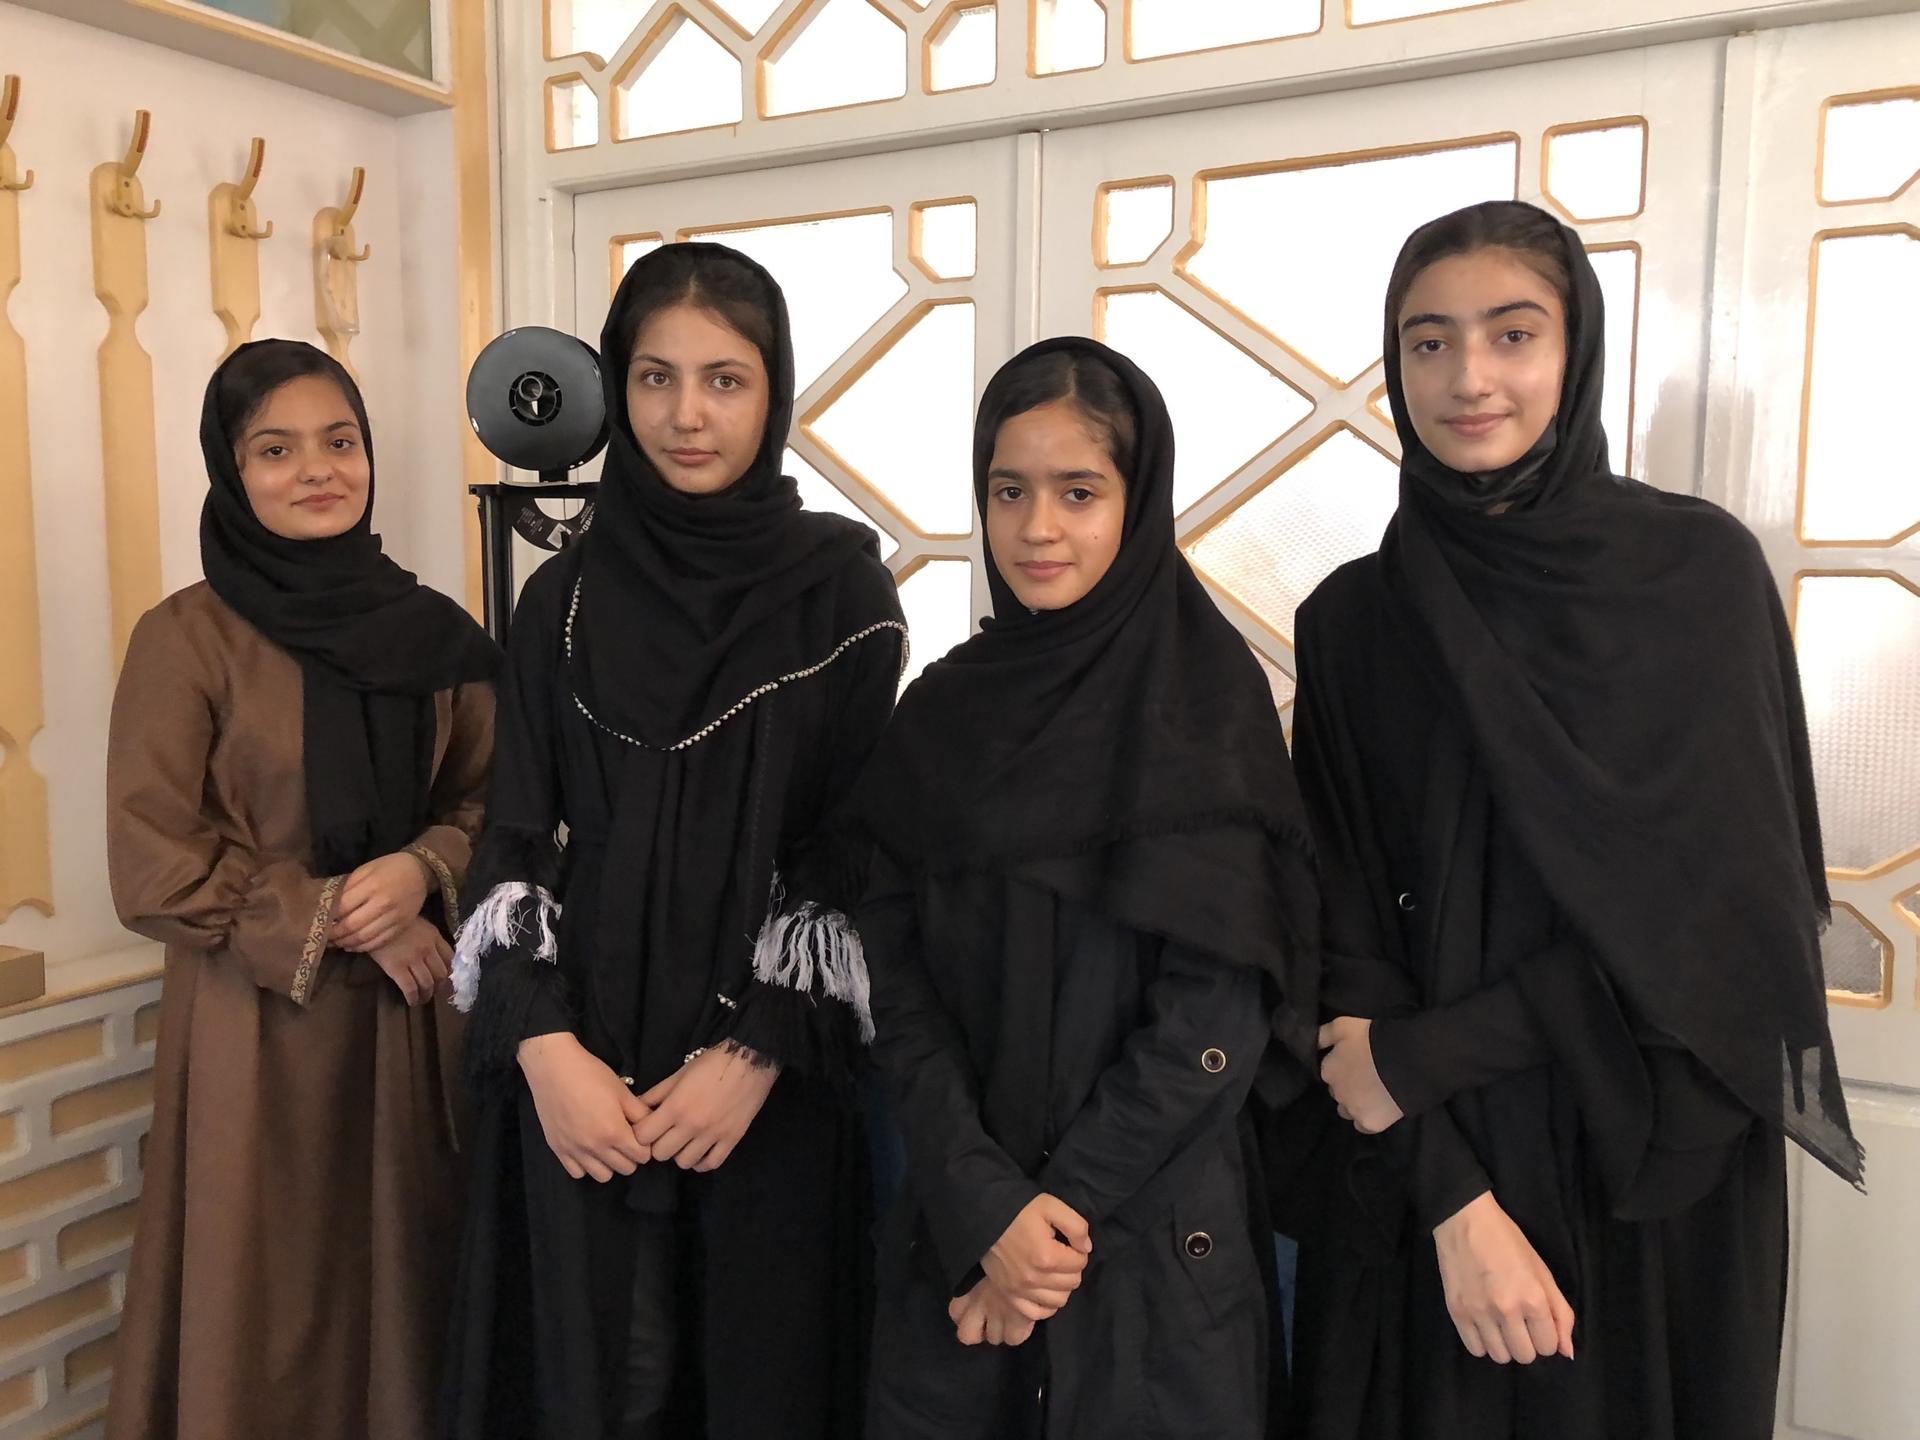 Some members of the Afghan Girls Robotics Team in Herat, Afghanistan.